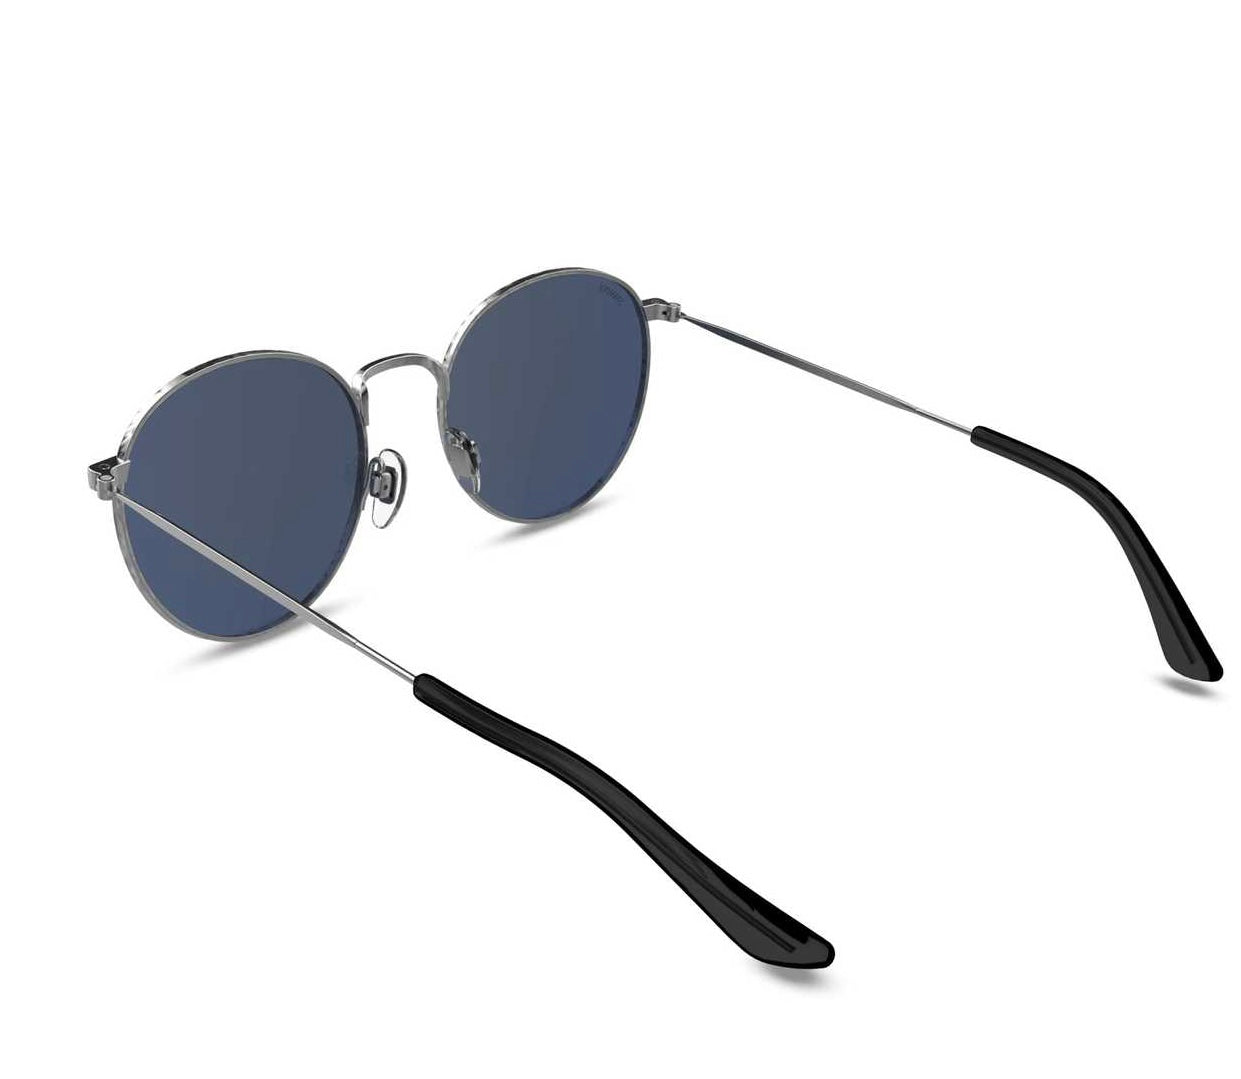 Pela’s Sustainable sunglasses santorini